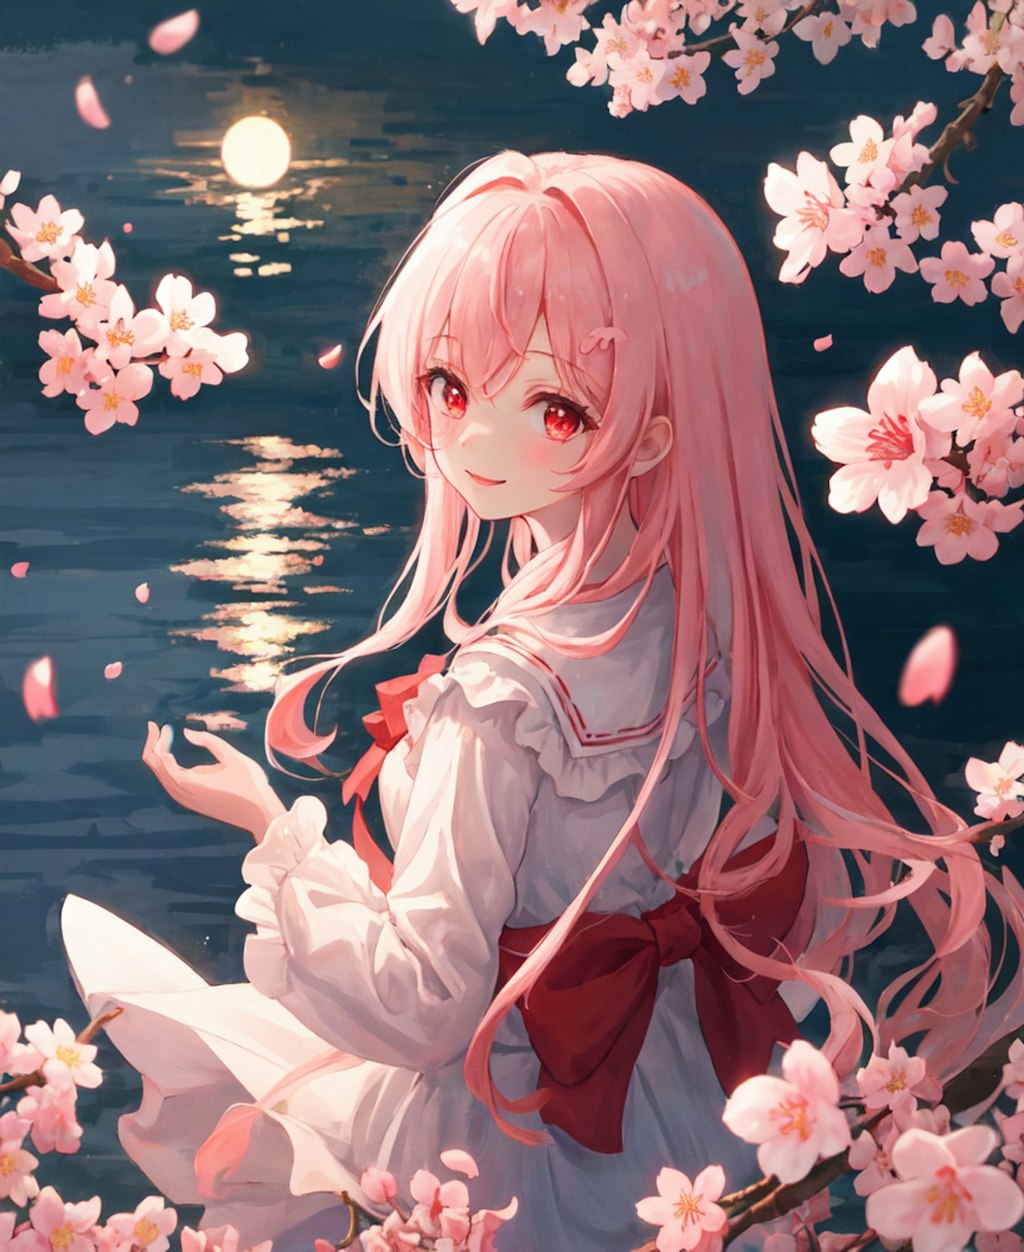 Fairy of Cherry Blossom